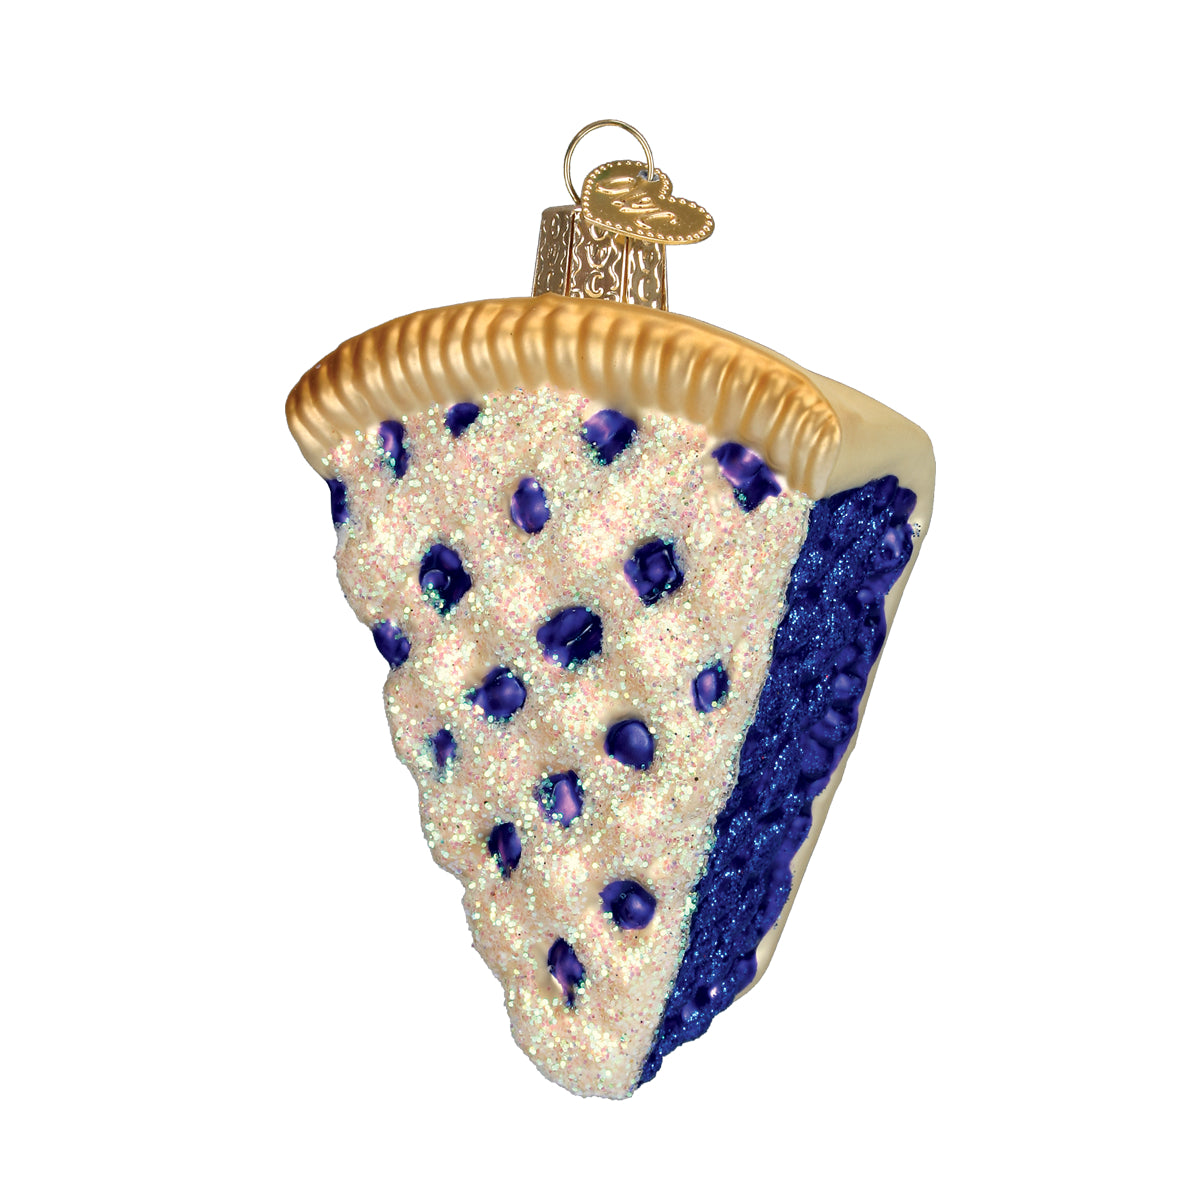 Blueberry Pie Ornament